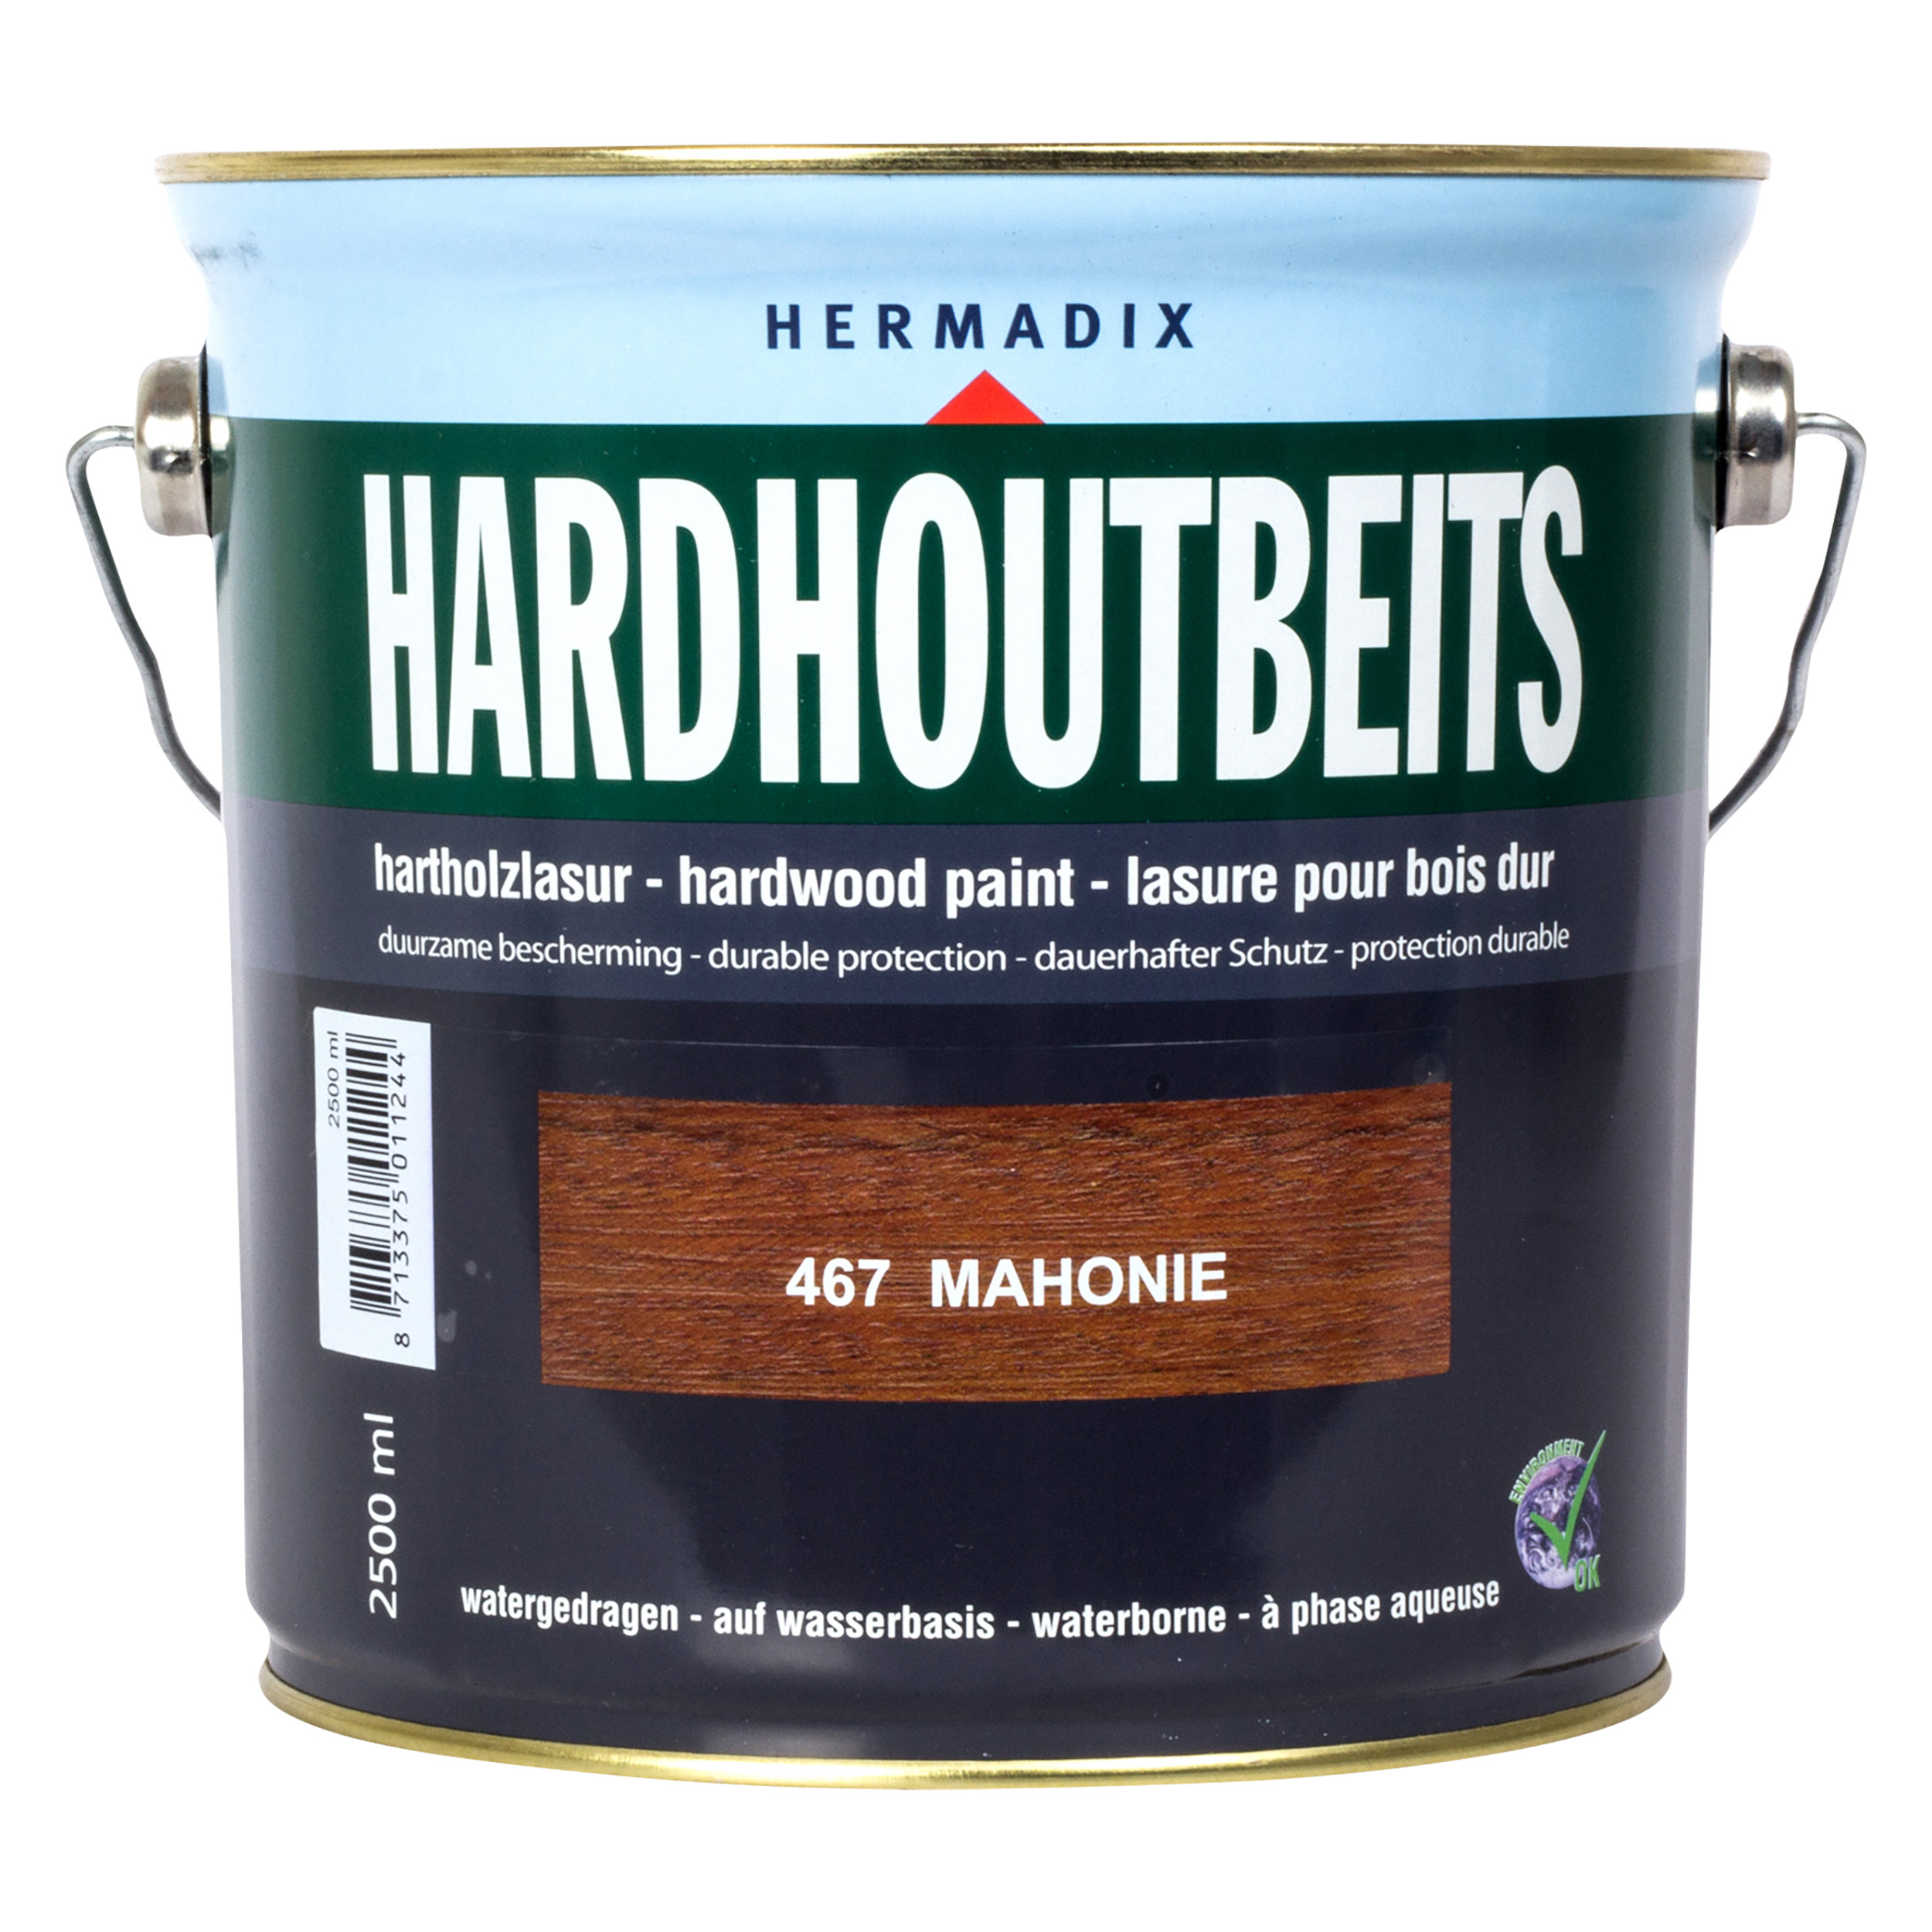 25.846.72 Hermadix  hardhoutbeits zijdeglans - 2500 ml - mahonie (467)